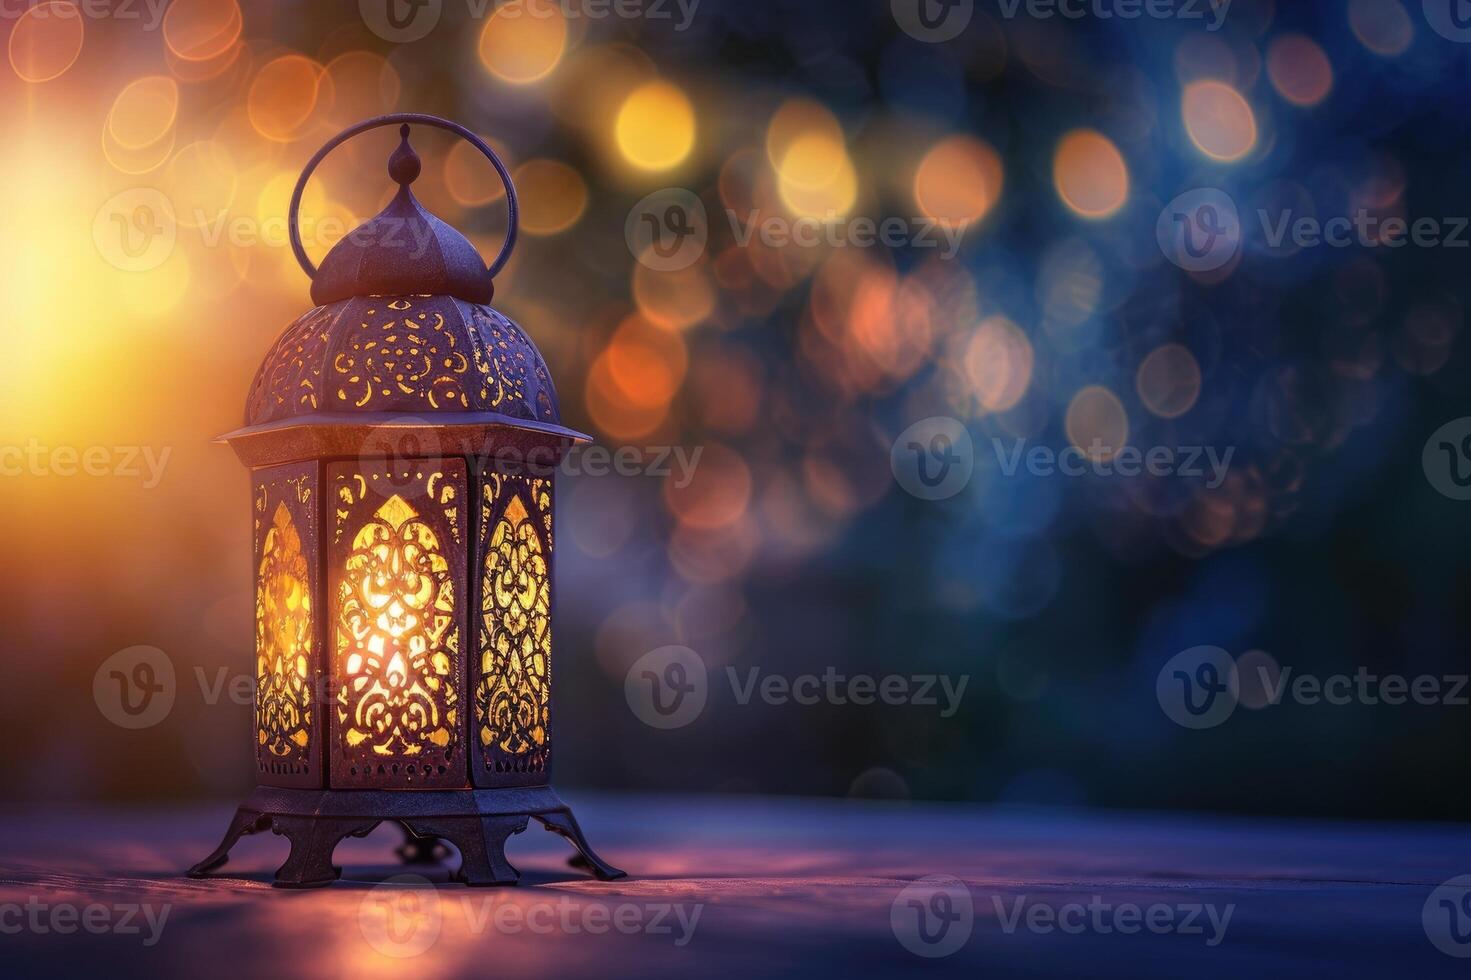 ai gegenereerd Ramadan kareem kalligrafie, sier- Arabisch lantaarn met brandend kaars gloeiend Bij nacht. groet kaart, uitnodiging voor moslim heilig maand Ramadan kareem. foto